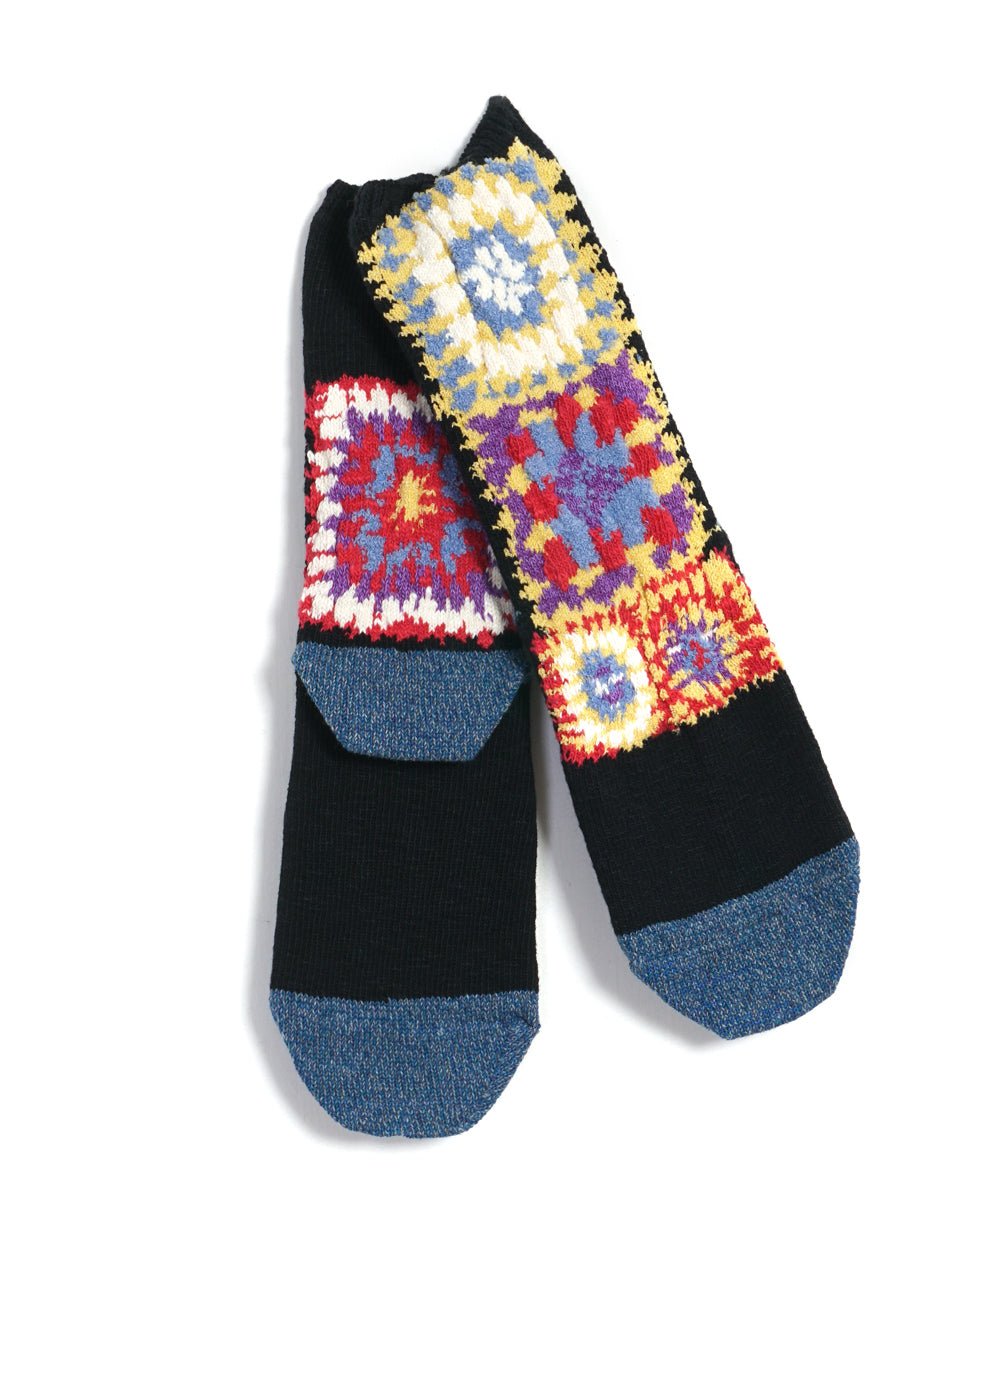 KAPITAL - CROCHET | 96 Yarns Socks With Crochet Lace Motif | Black - HANSEN Garments